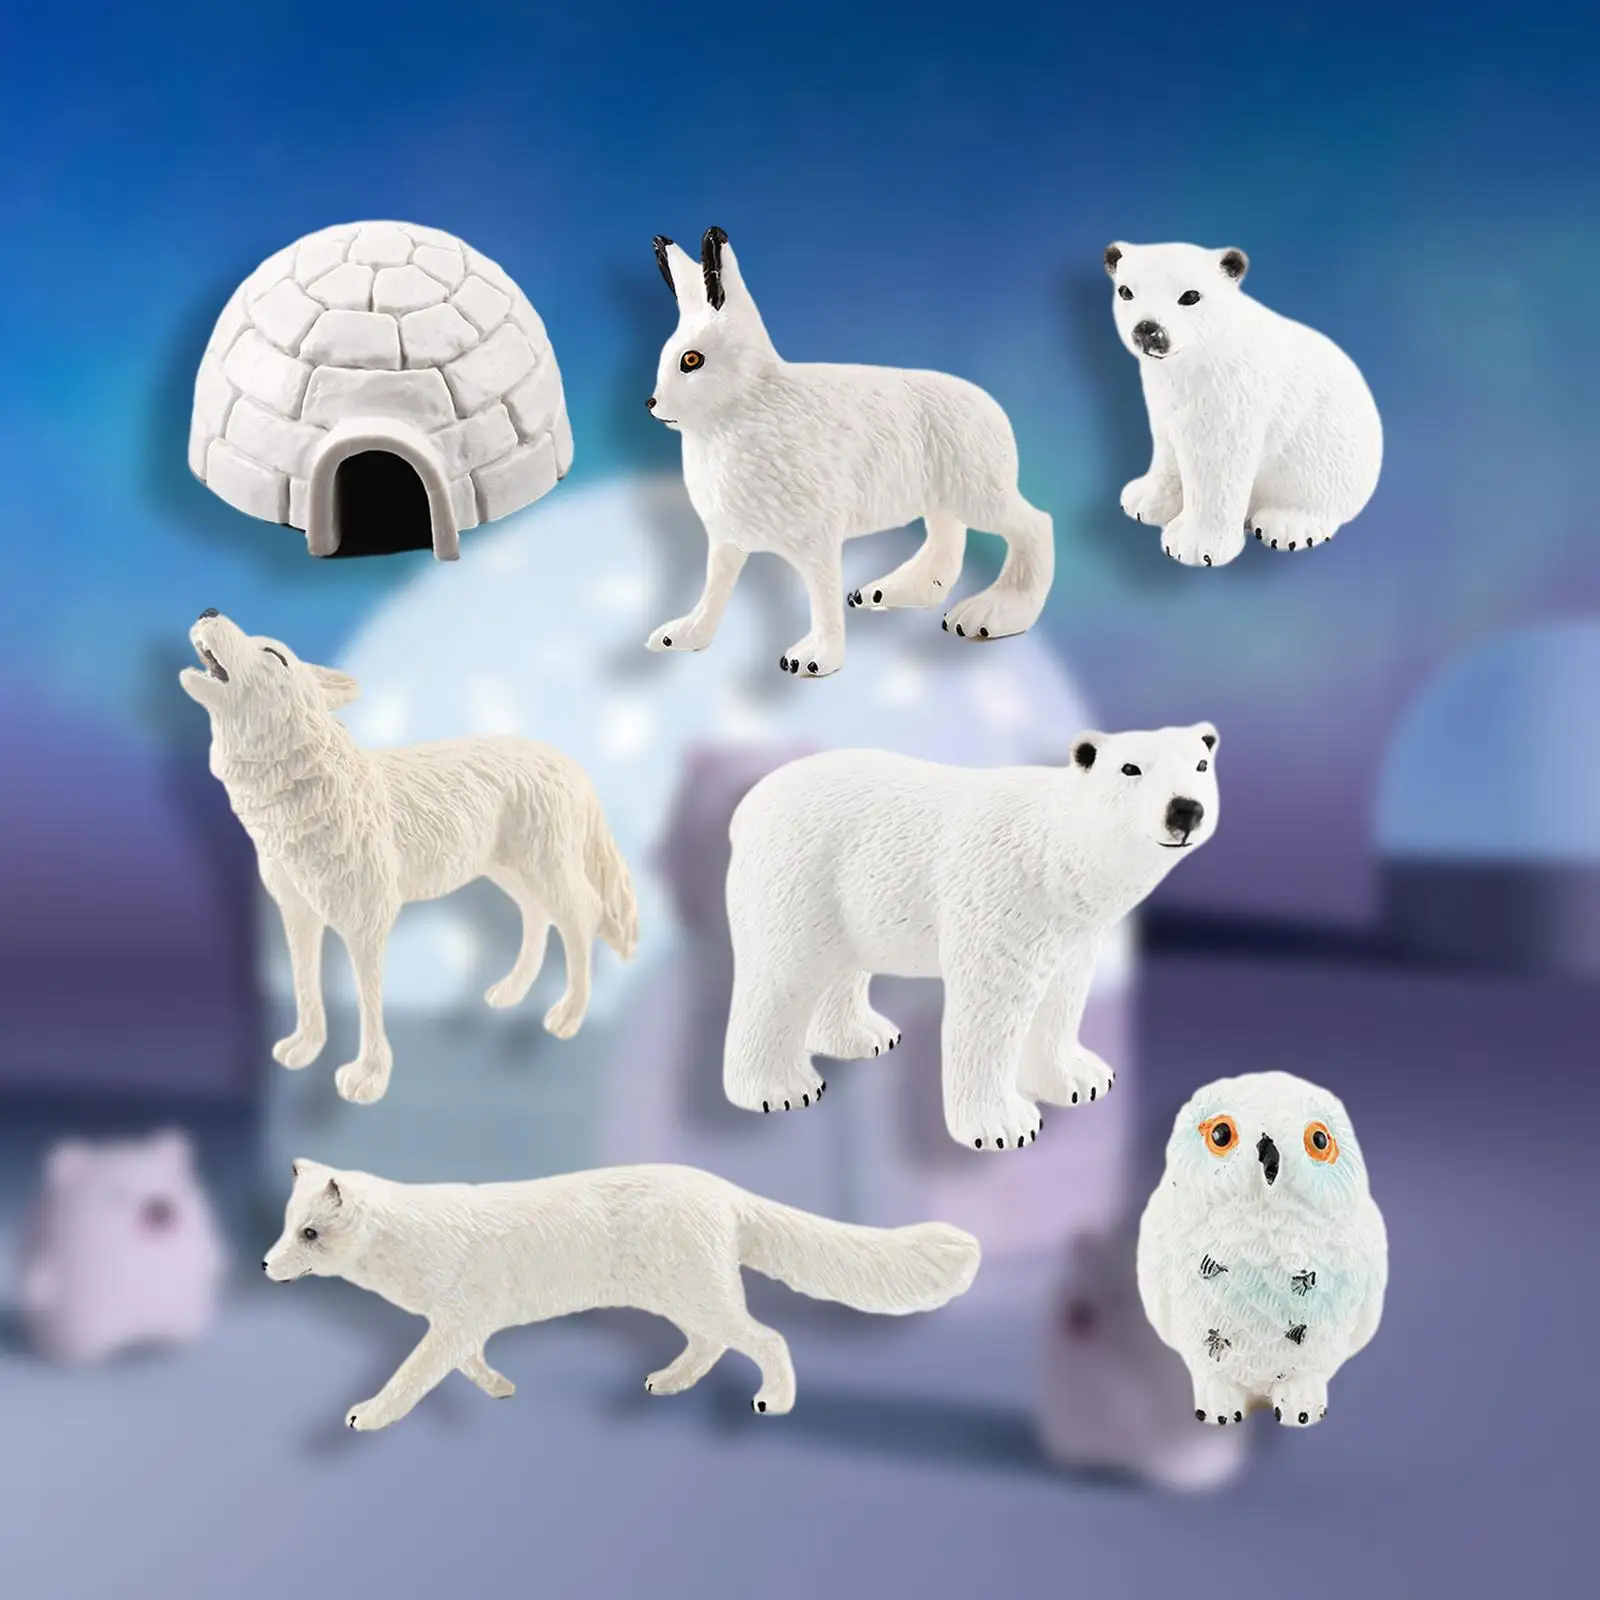 7 Pieces Arctic Animal Model Miniatures for Ornament Theme Party Decoration